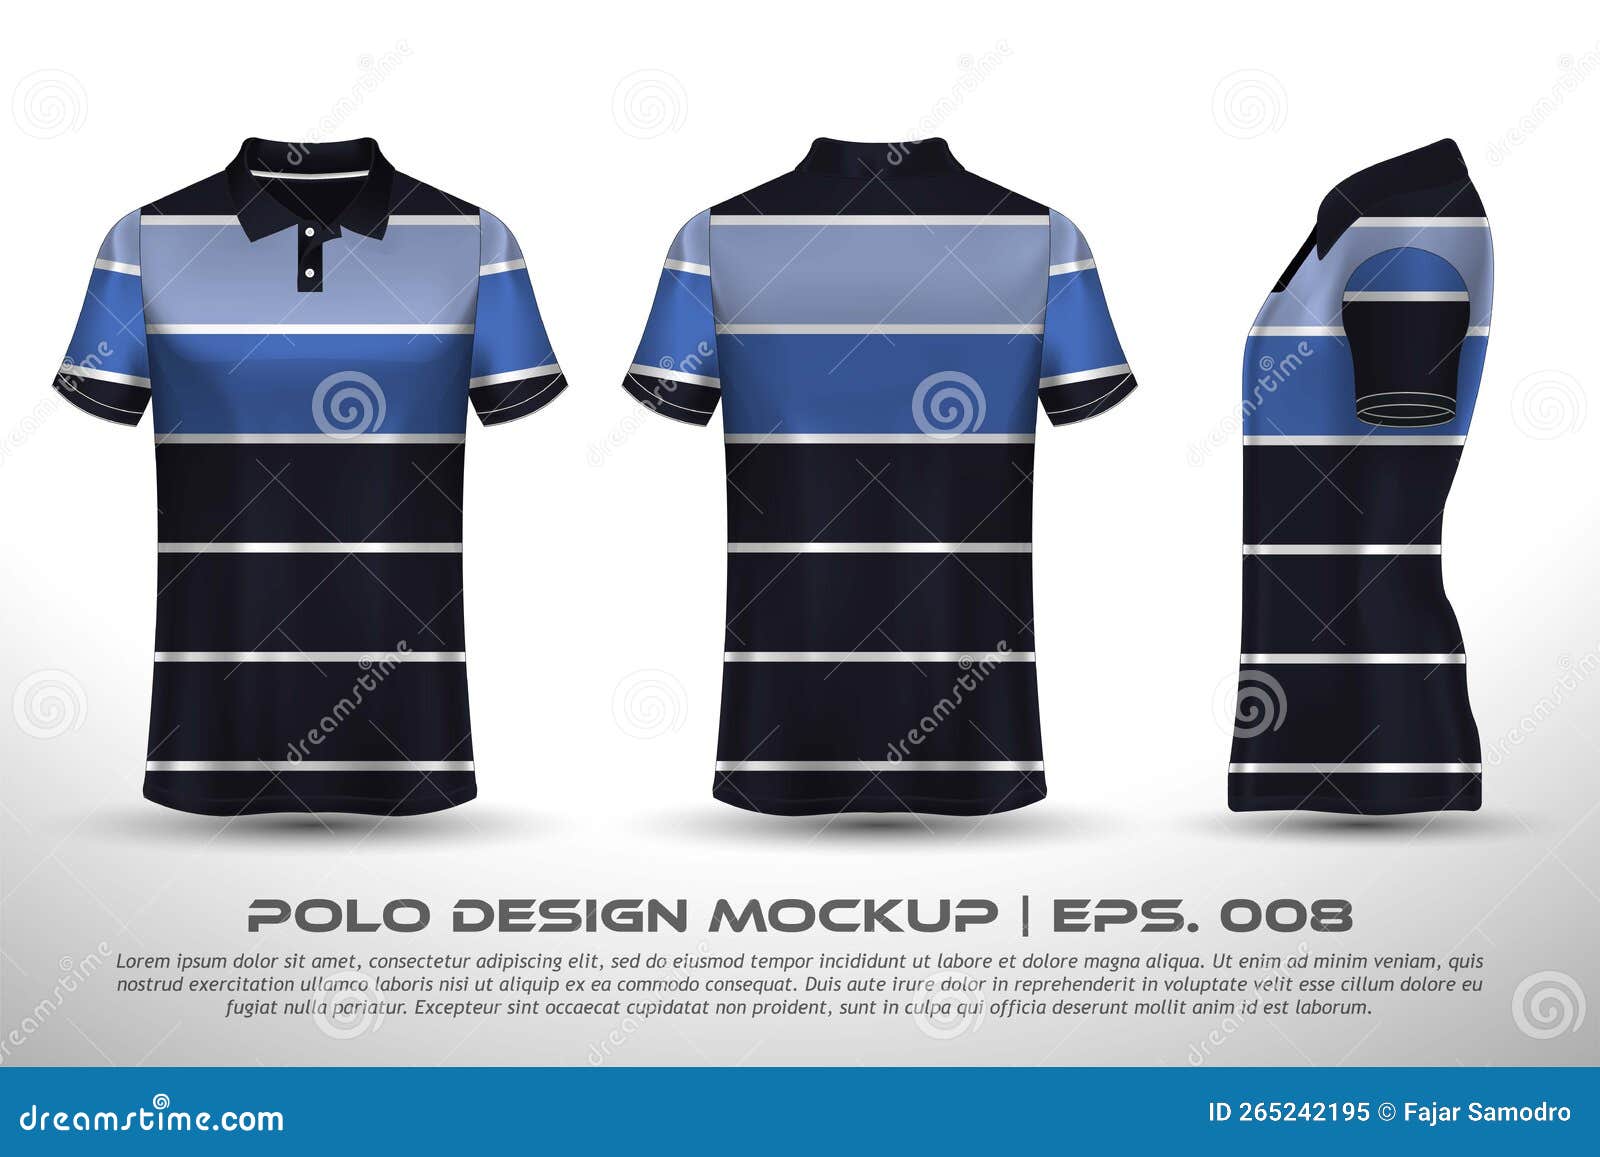 Premium Vector  Sublimation jersey design soccer sports jersey template -  sports jersey design navy blue background